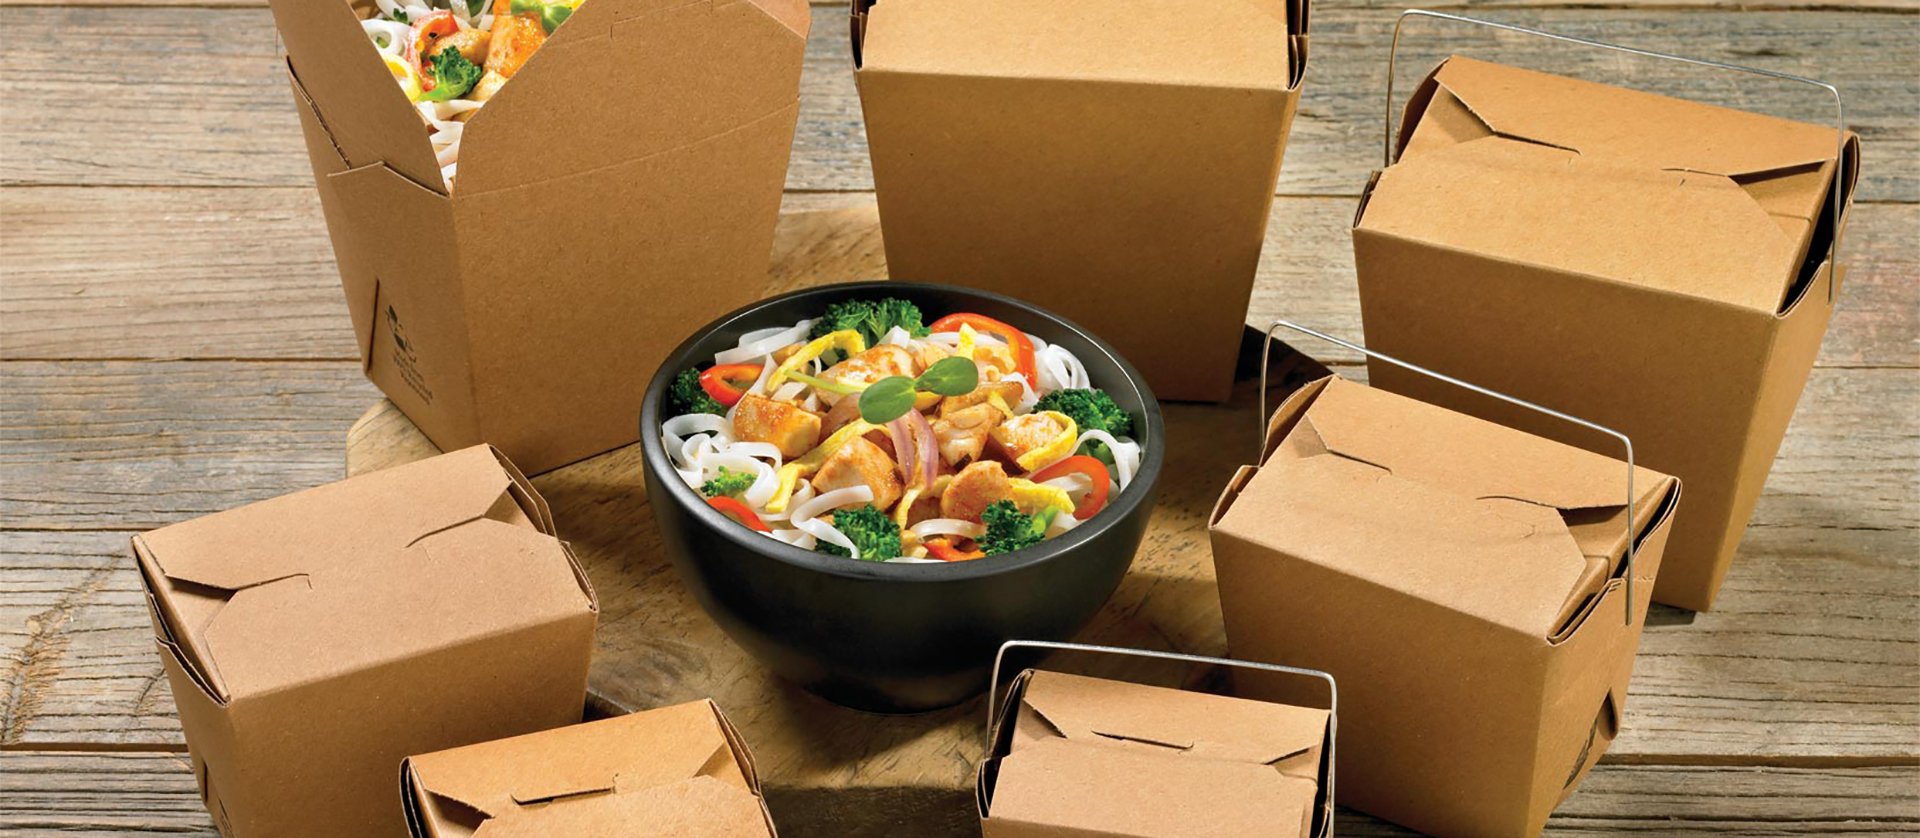 Package errno. Бумажная упаковка для еды. Еда в упаковке. Упаковка для еды на вынос. Коробки для еды на вынос.